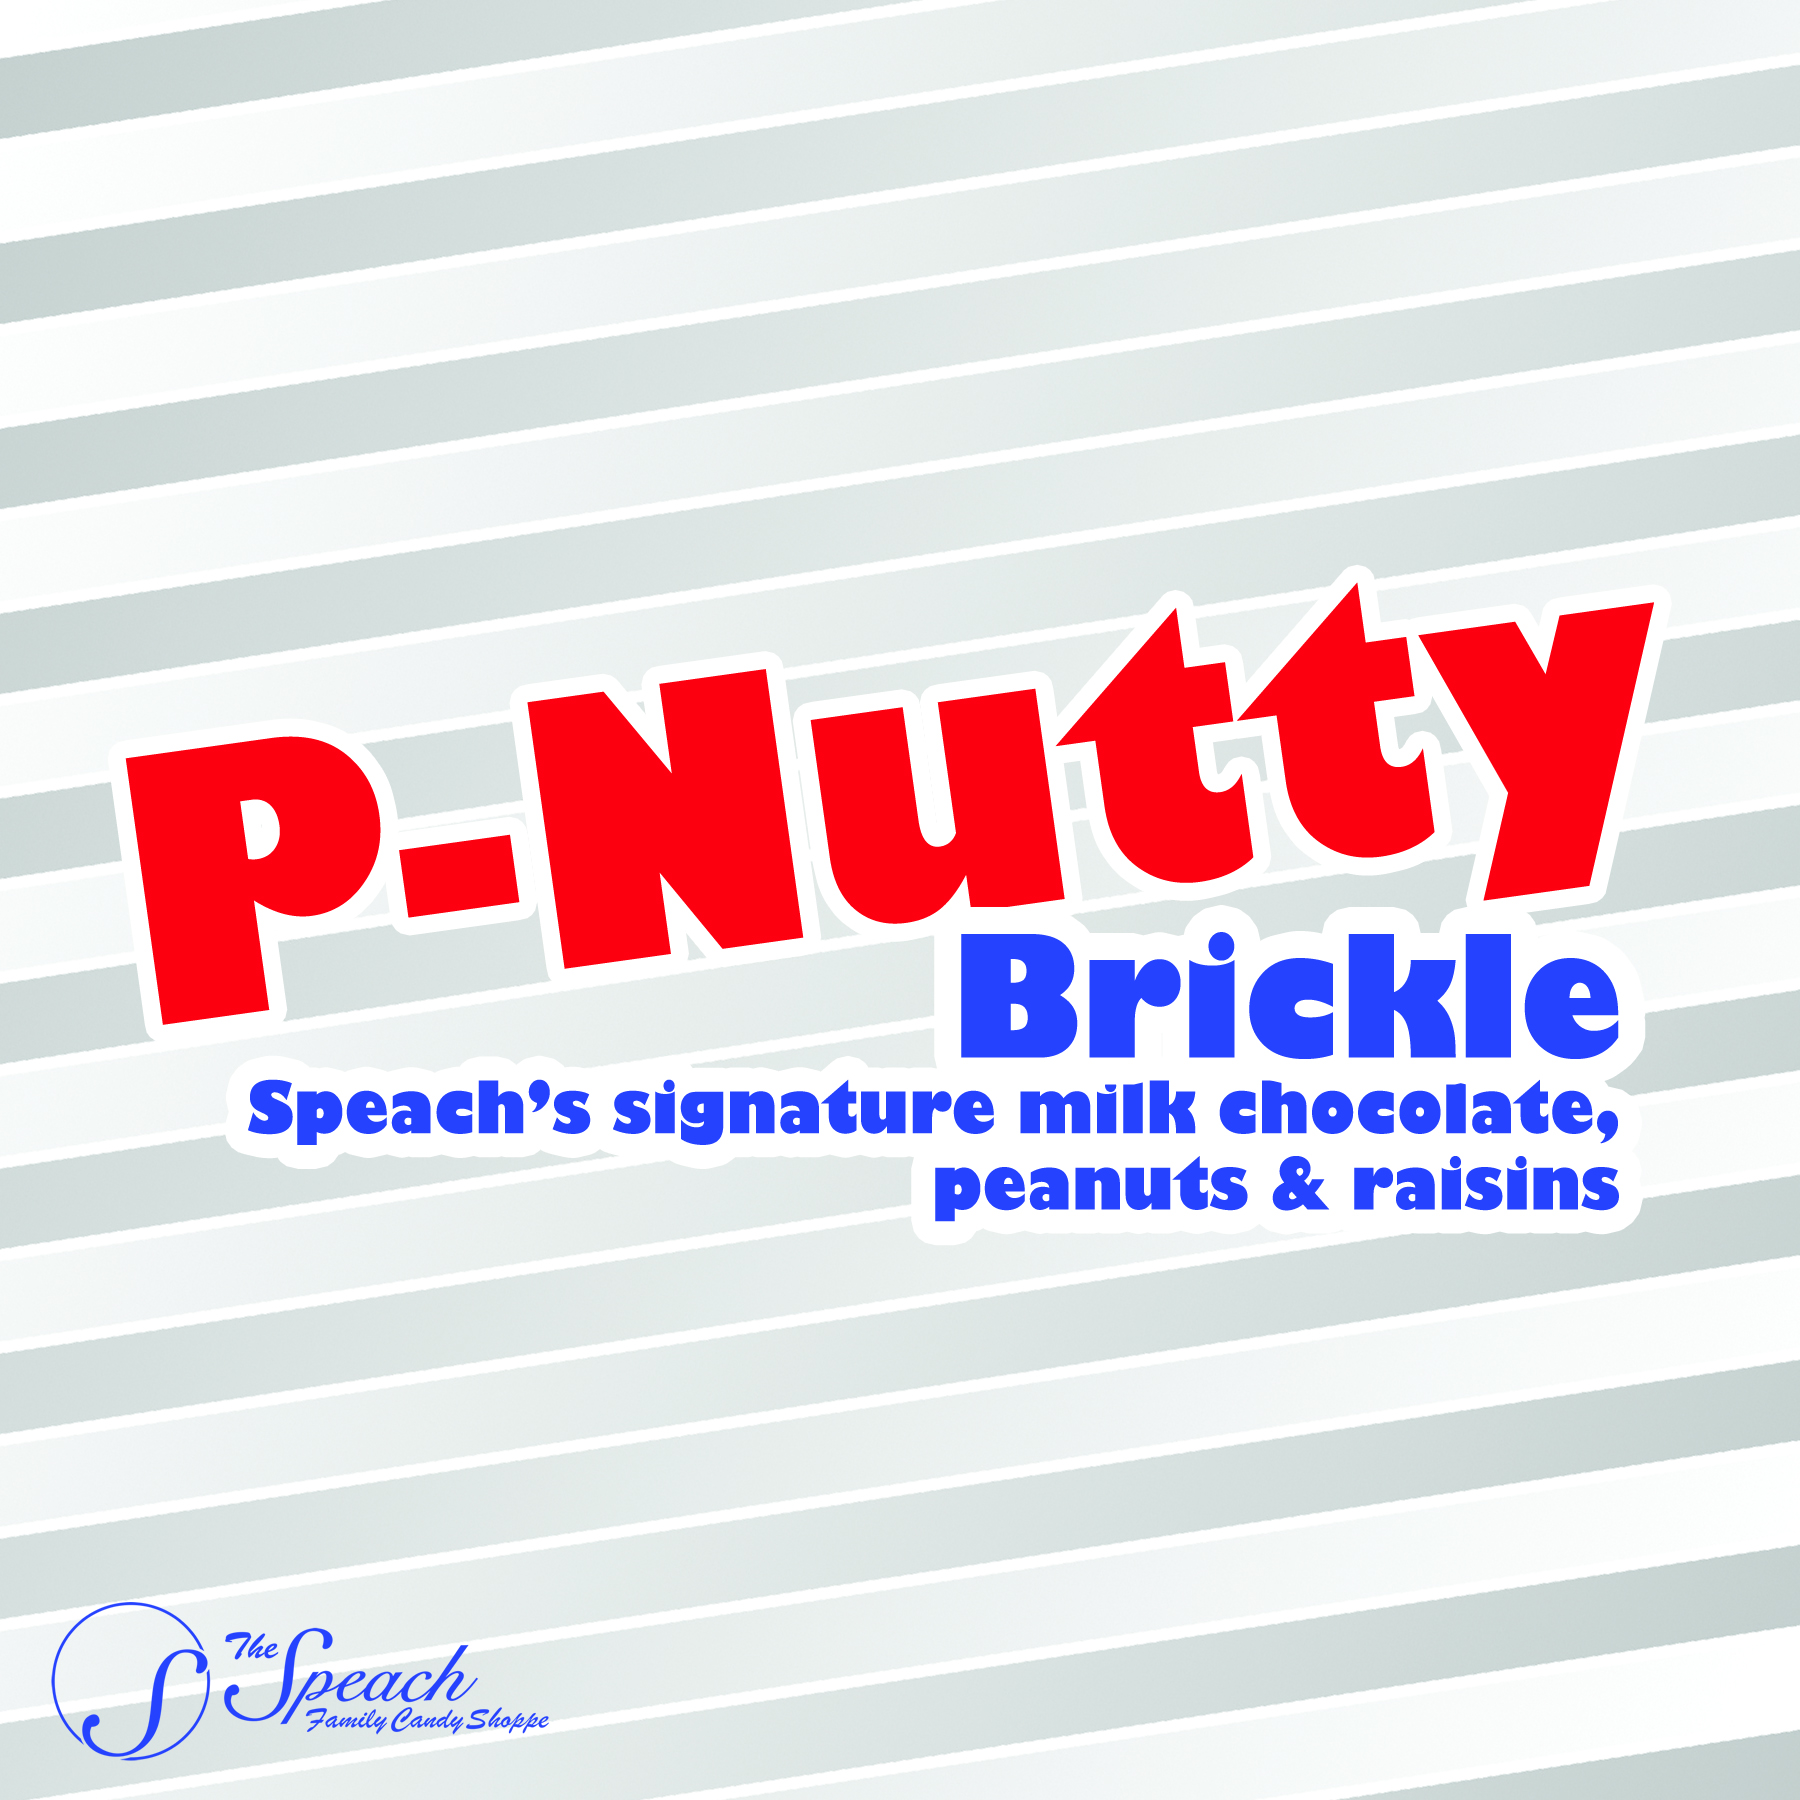 P-Nutty Brickle Label